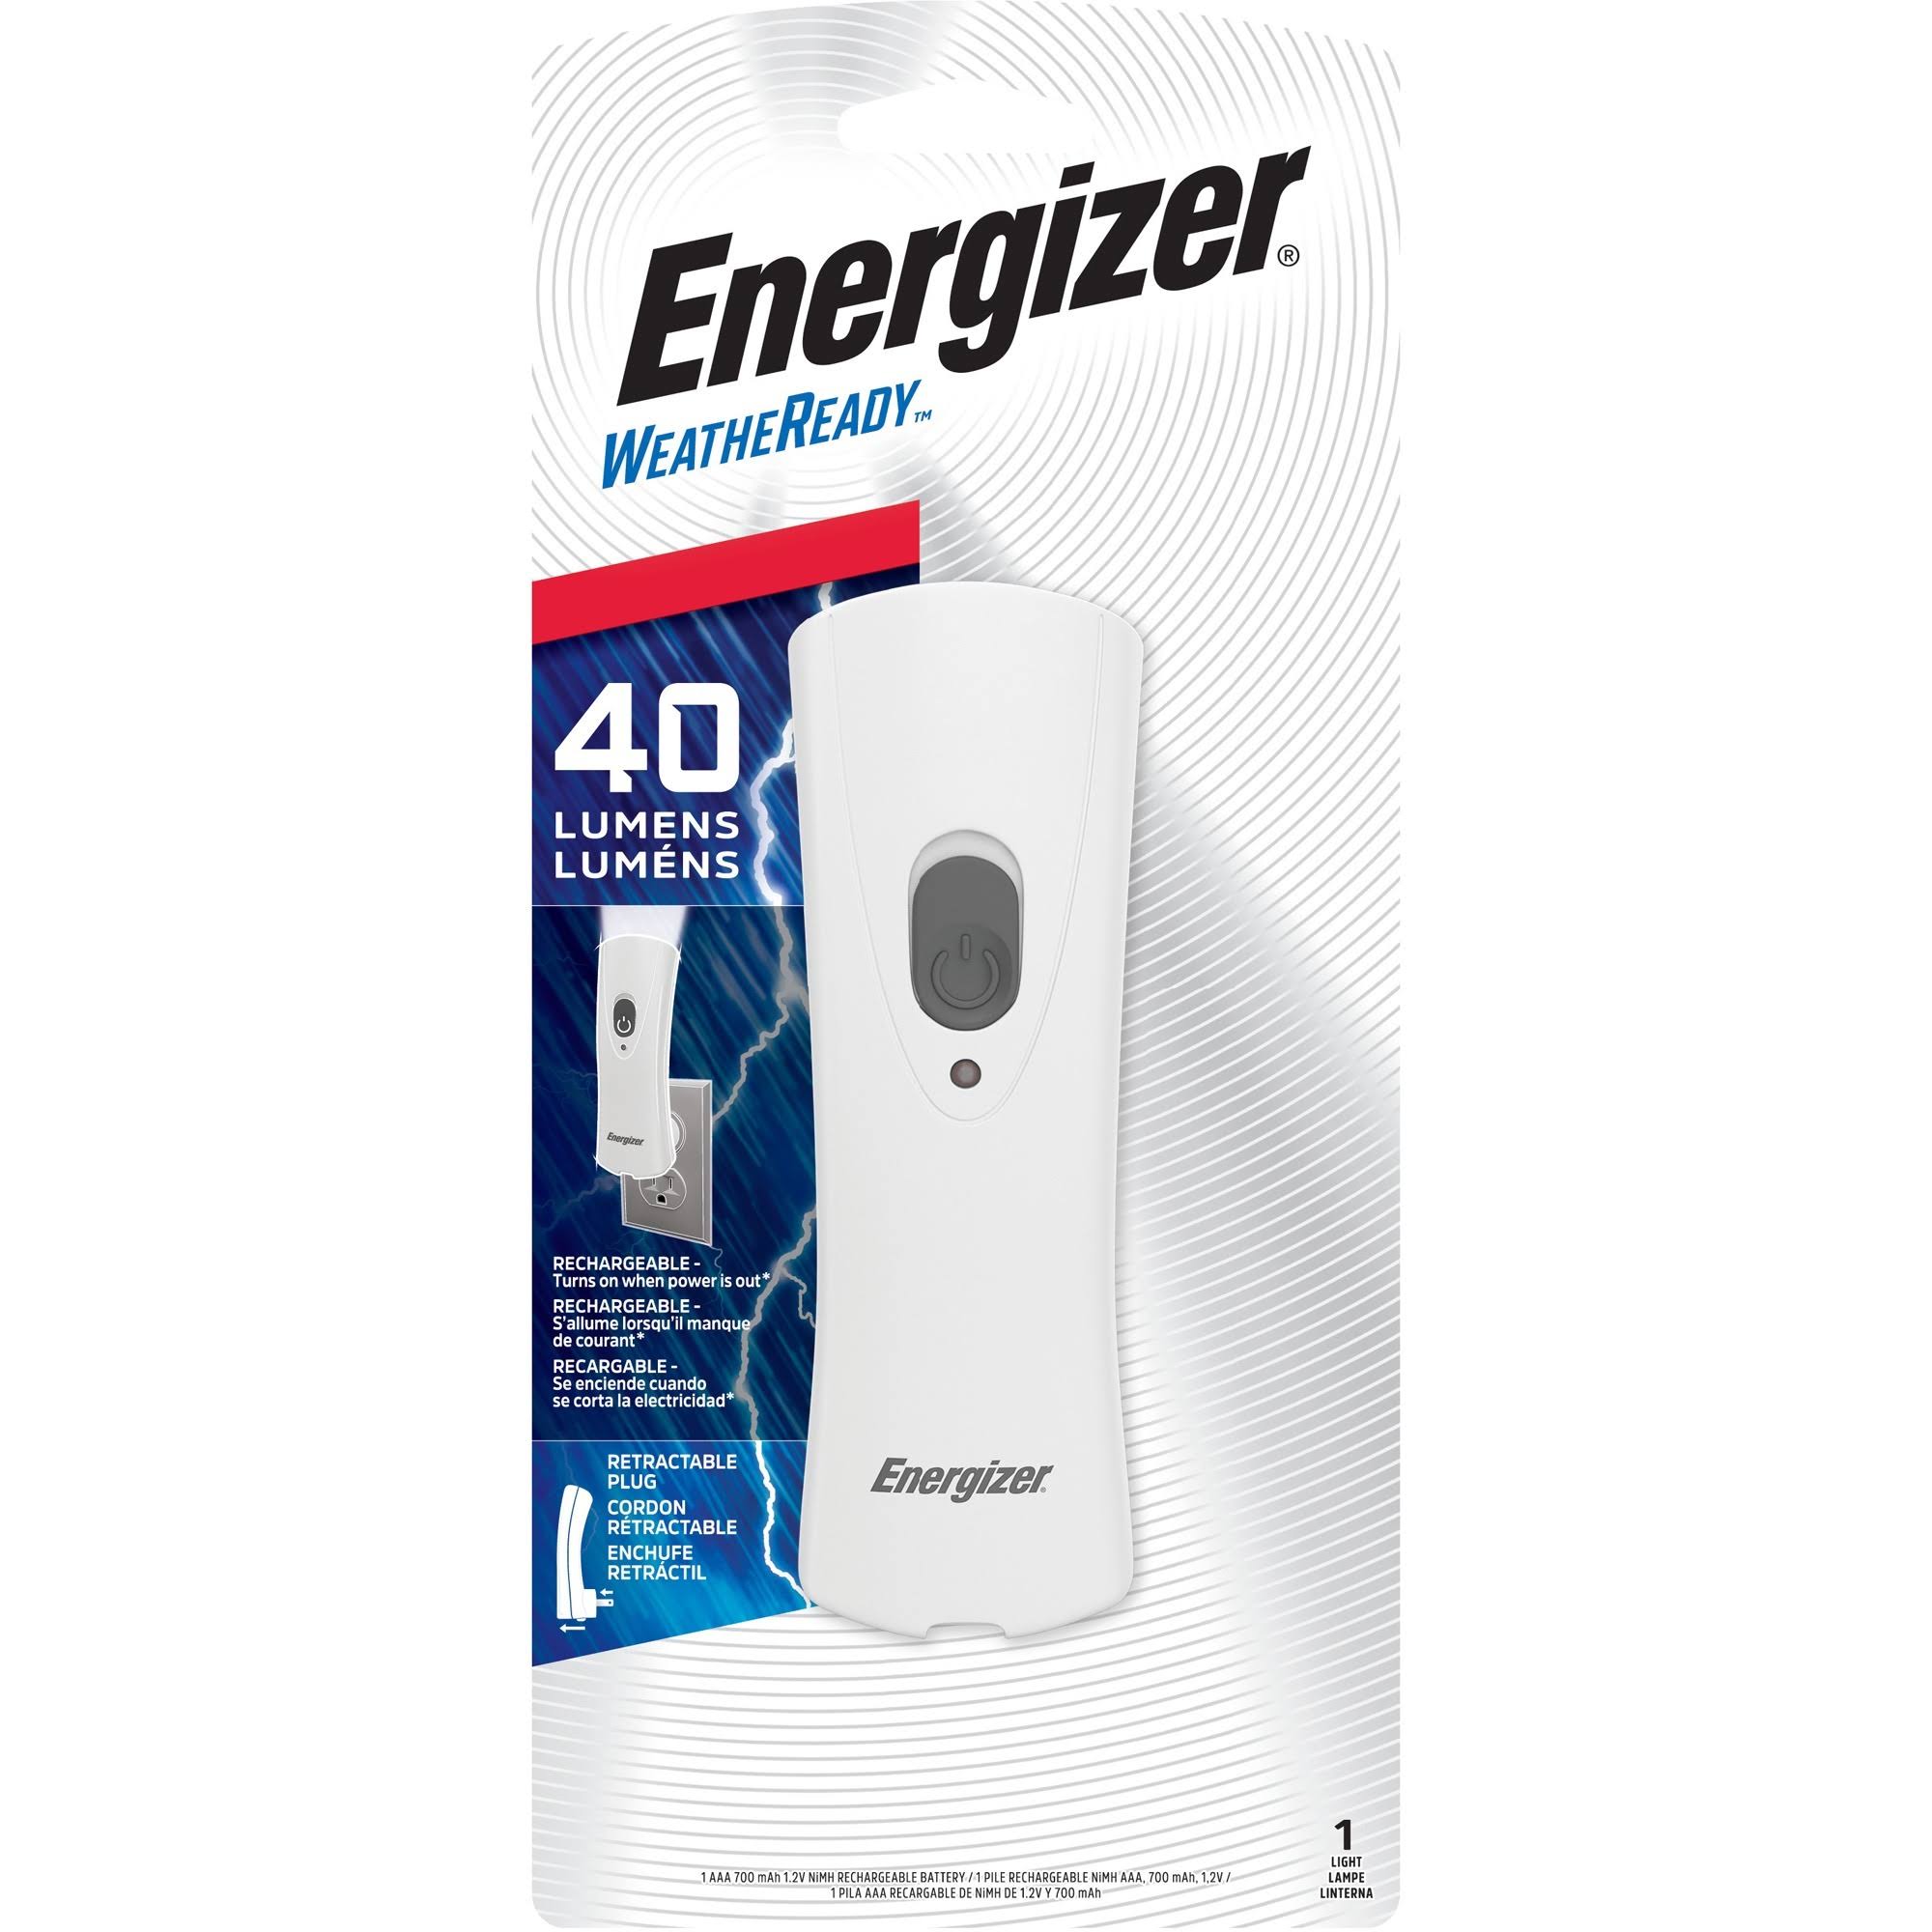 Energizer LED Light Rechargeable